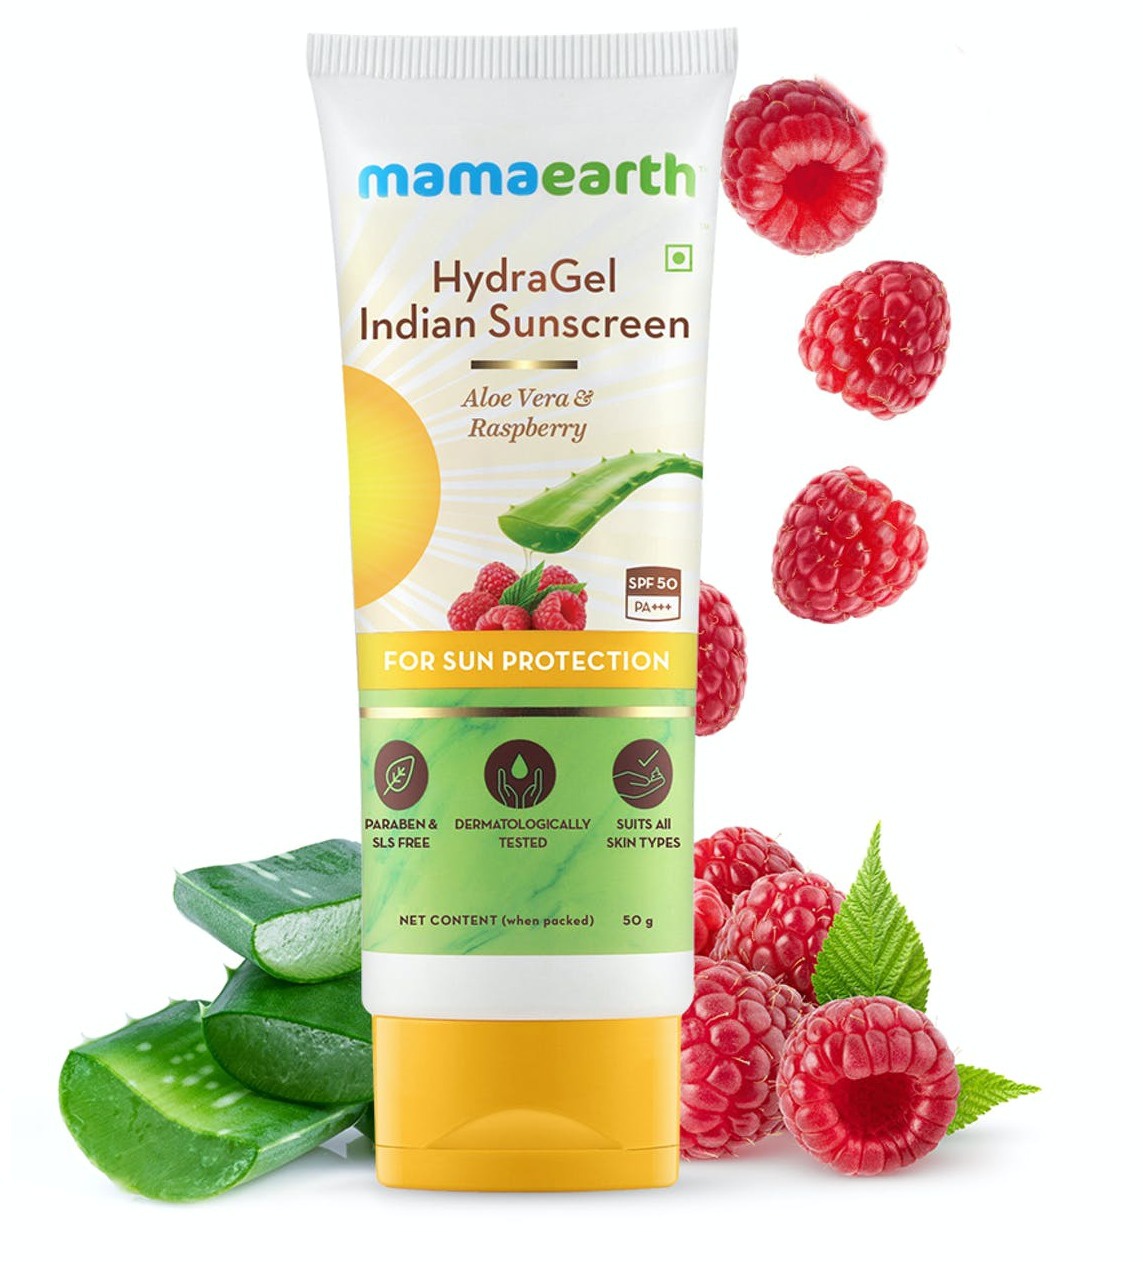 Mamaearth Hydragel Indian Sunscreen SPF 50 PA+++